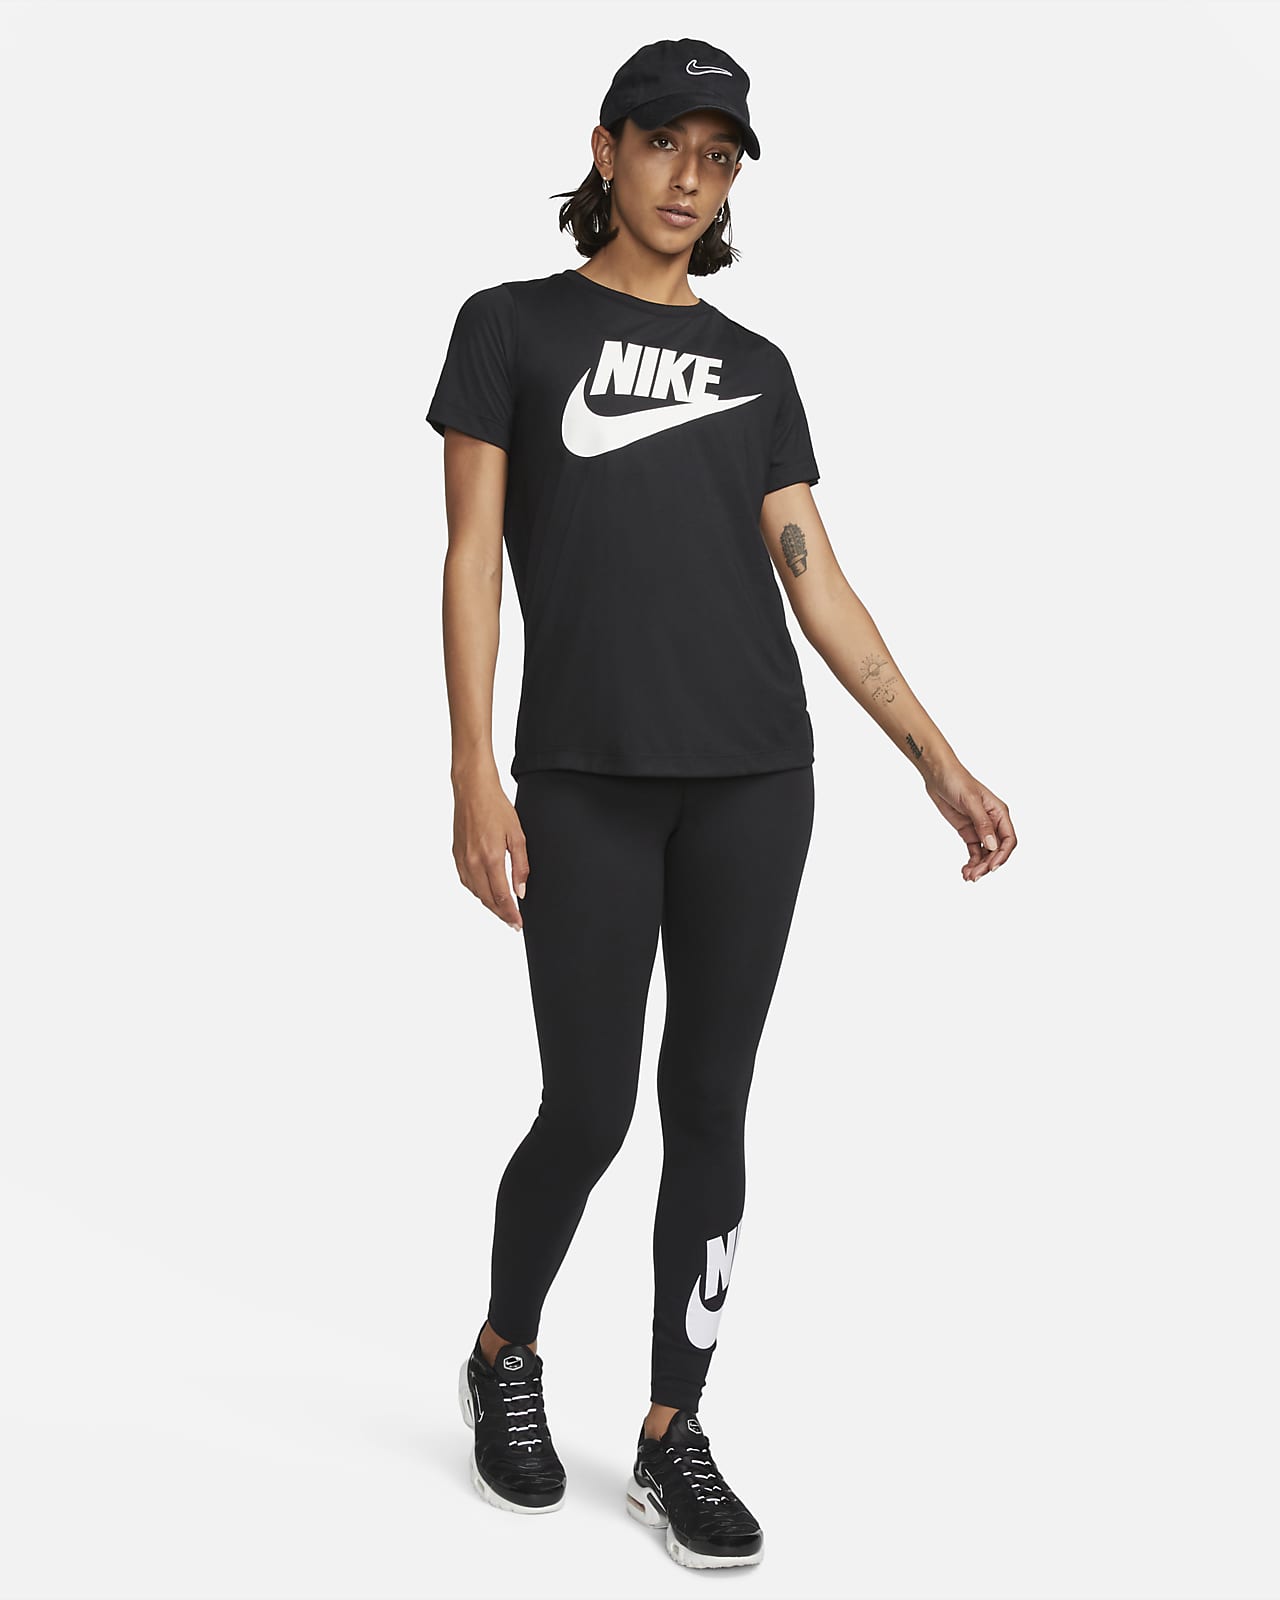 Nike Sportswear Women's High-Waisted Full-Length Graphic Leggings. Nike LU